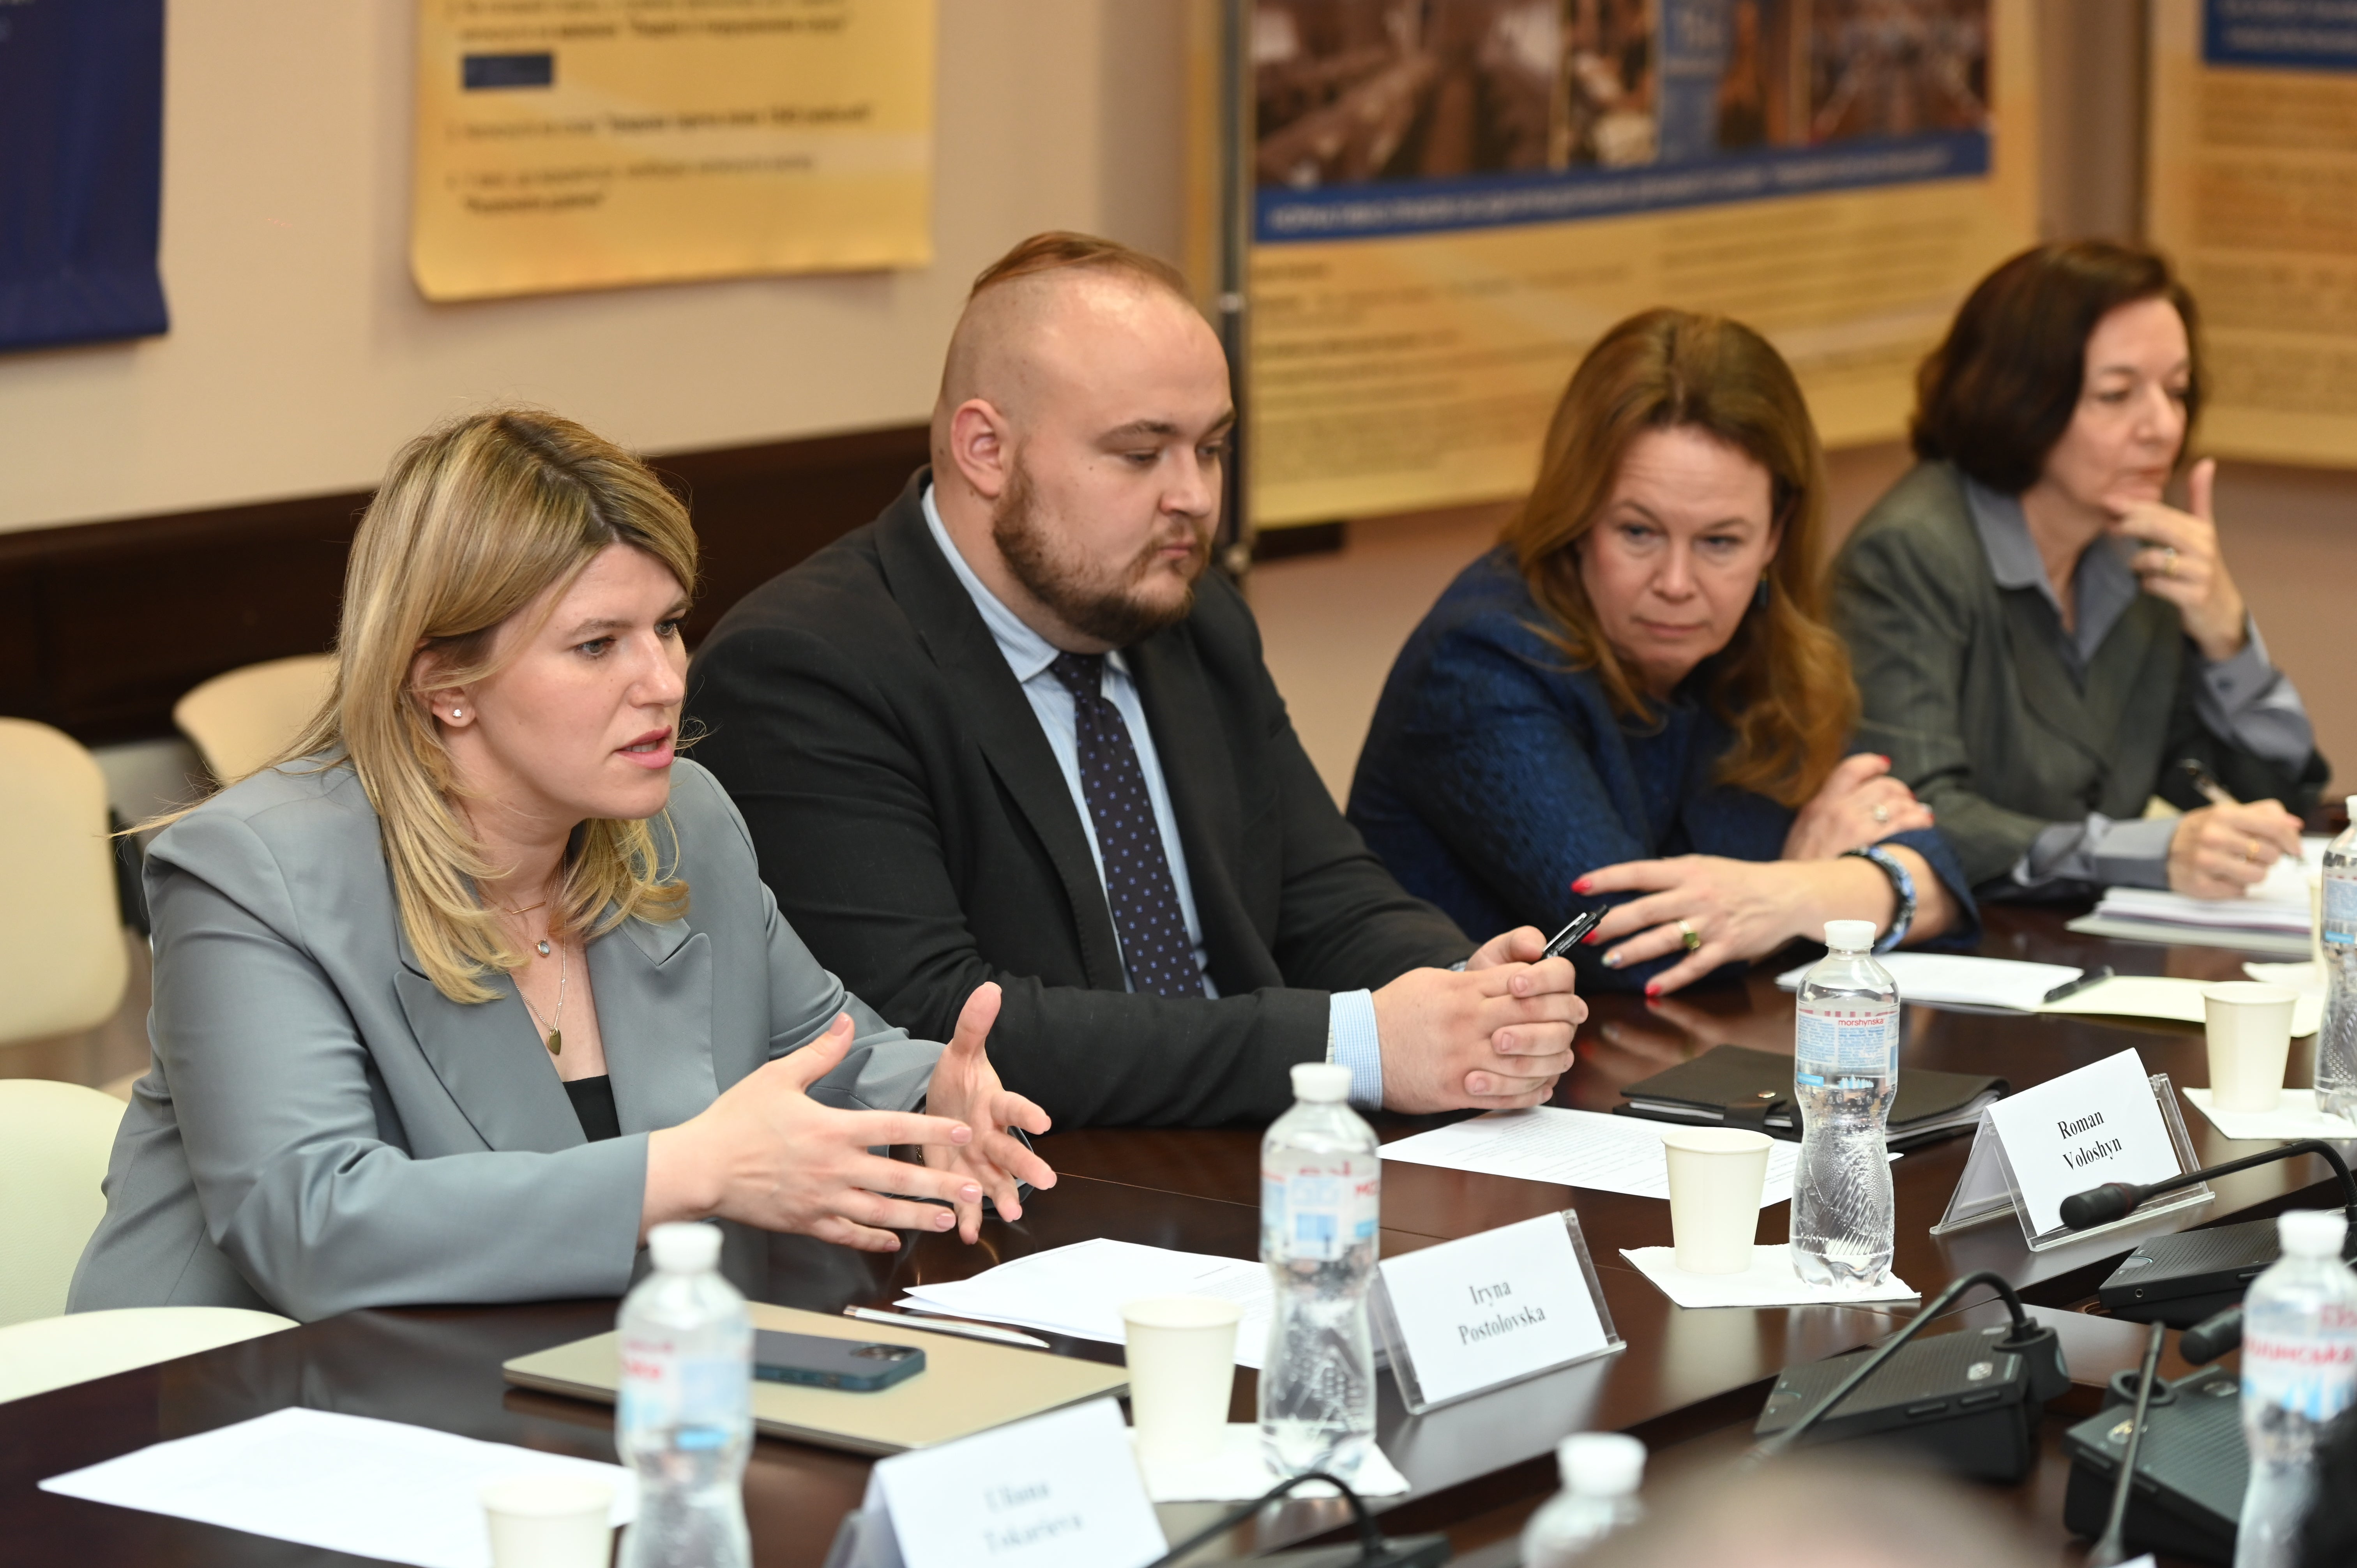  Meeting of the Executive Board with Iryna Postolovska, Deputy Minister of Social Policy on European Integration of the Ministry of Social Policy of Ukraine. Photo: UN Women/Dmytro Korenev 3